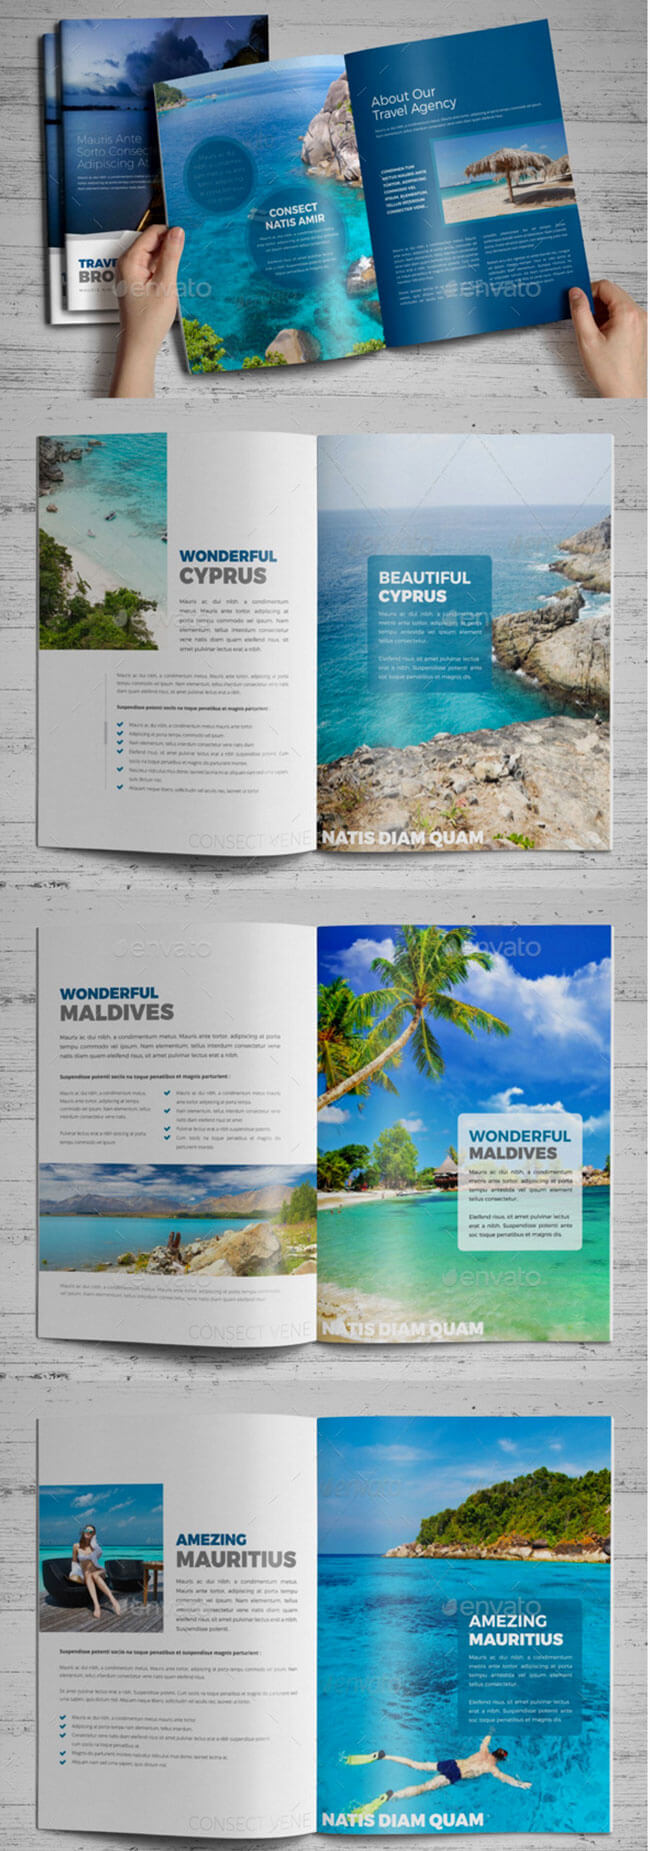 40+ Best Travel And Tourist Brochure Design Templates 2019 For Travel And Tourism Brochure Templates Free